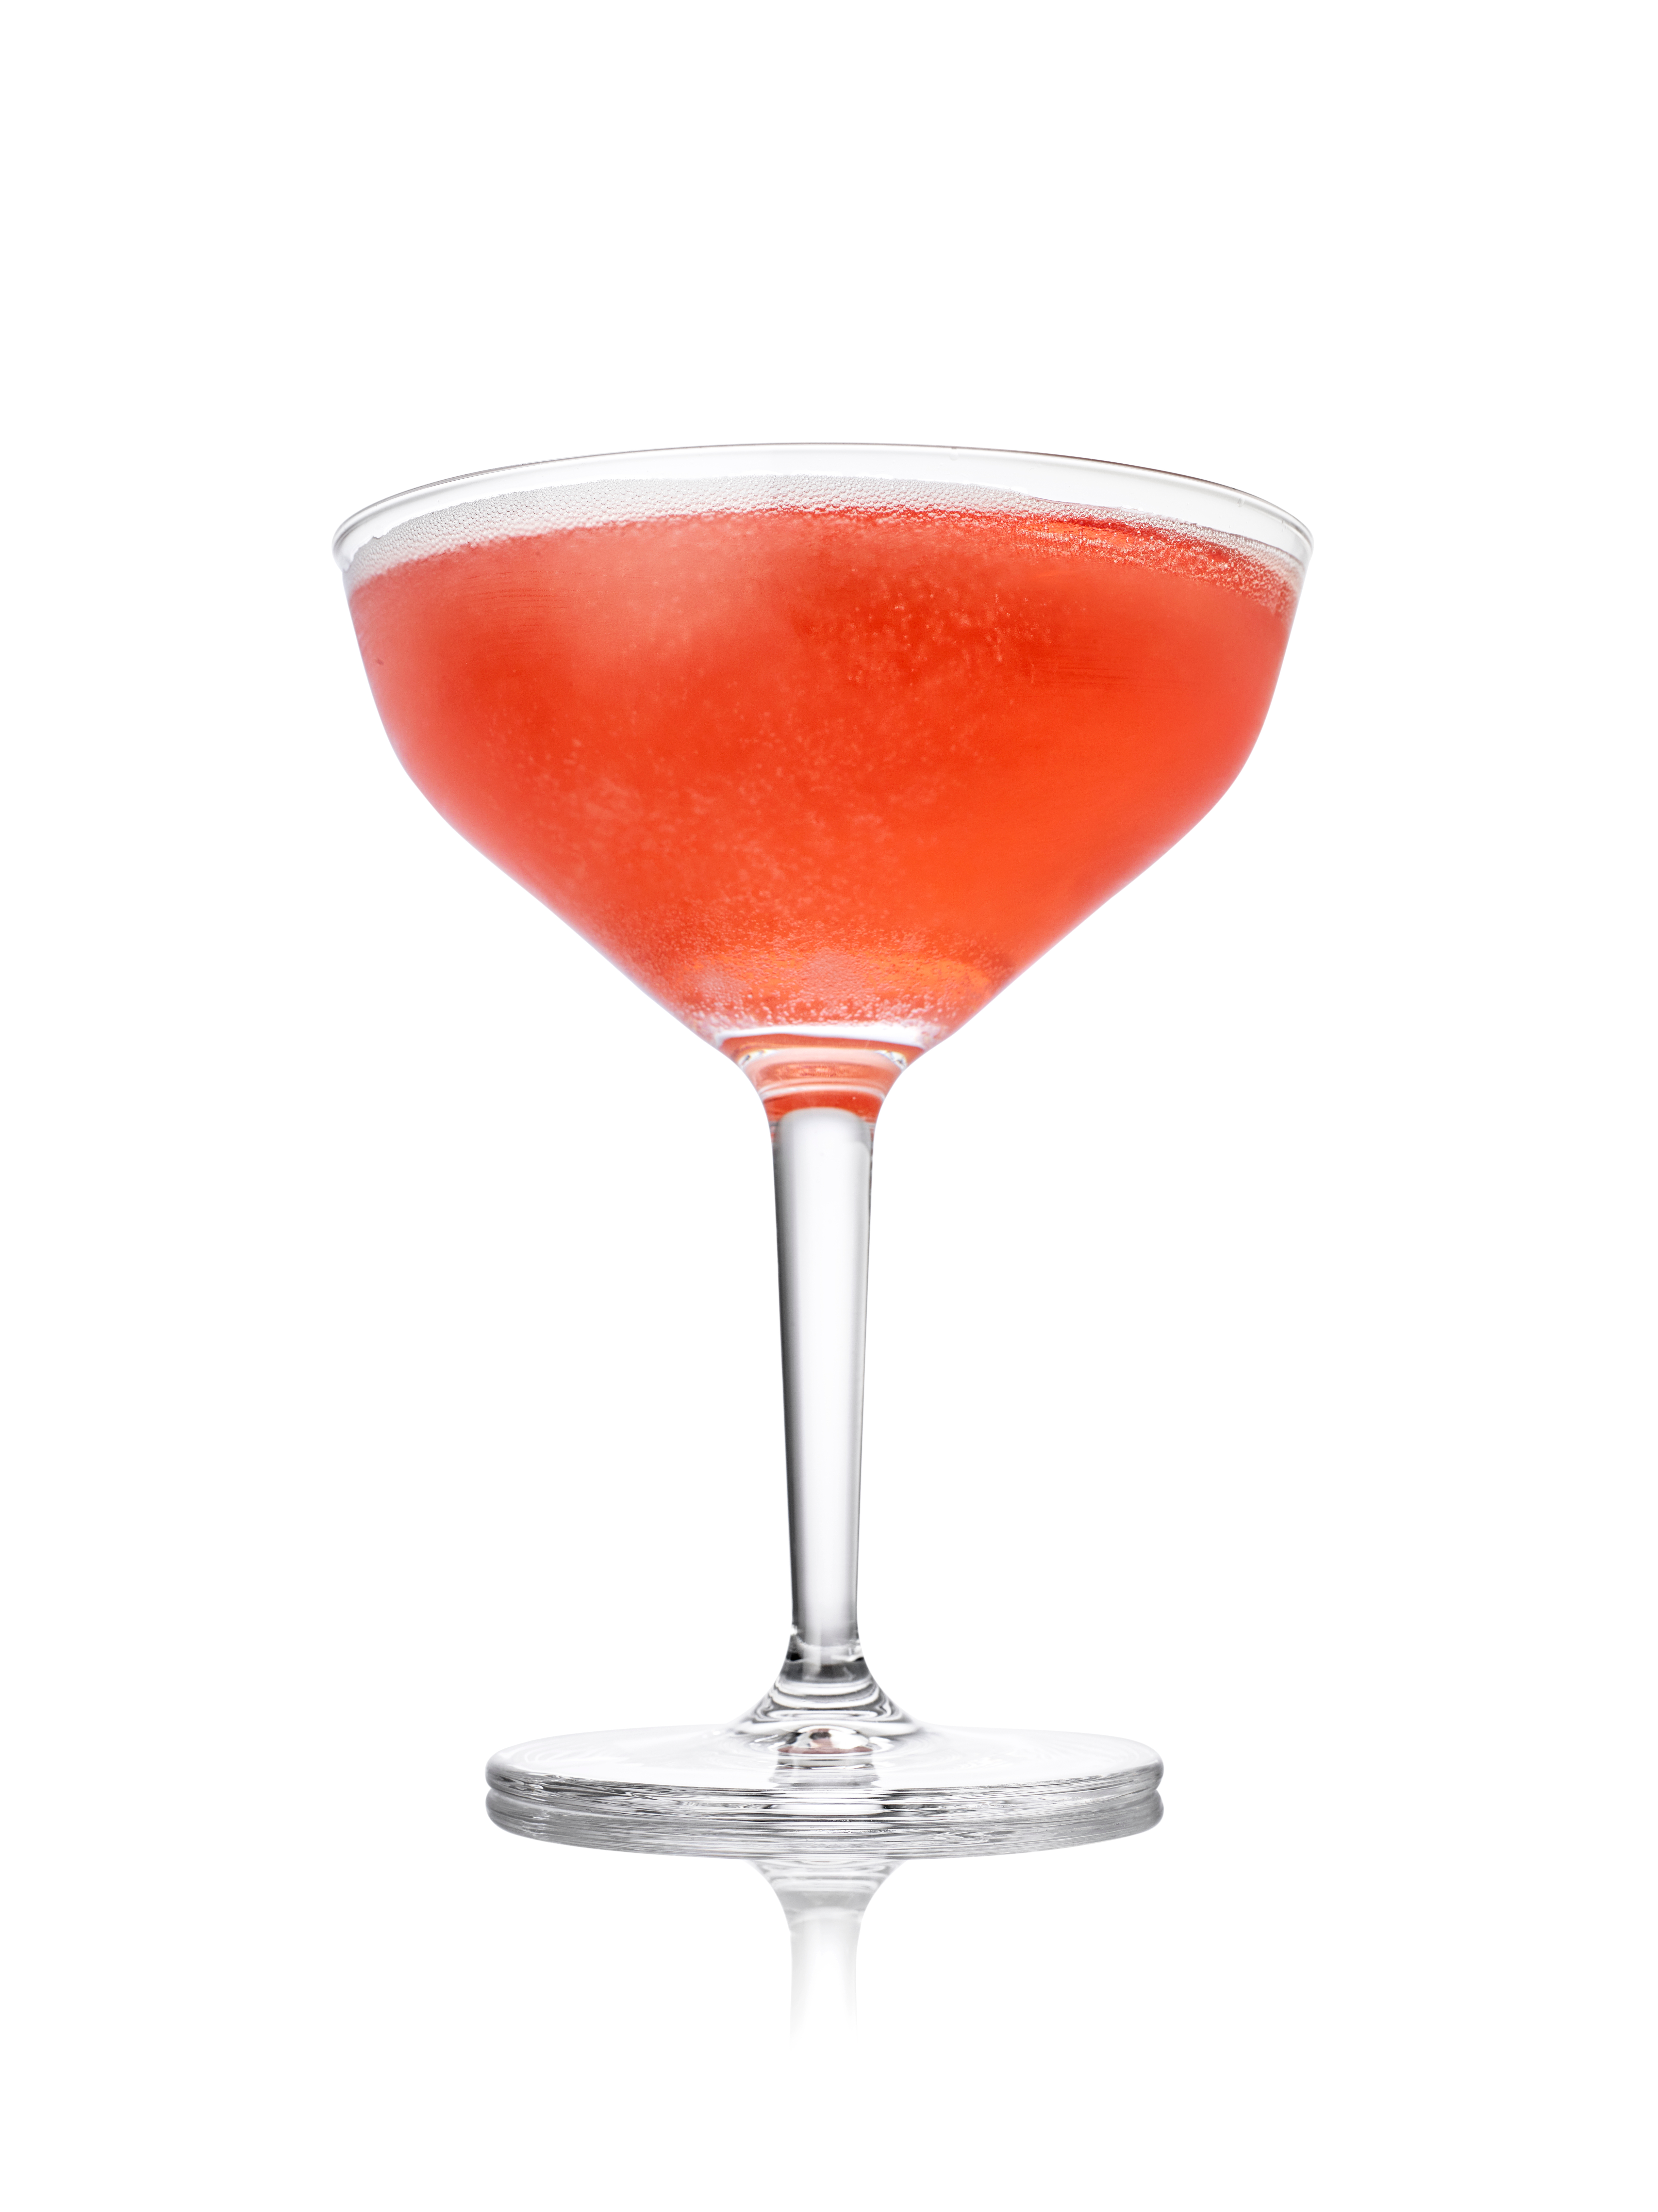 Strawberry Sidecar cocktail